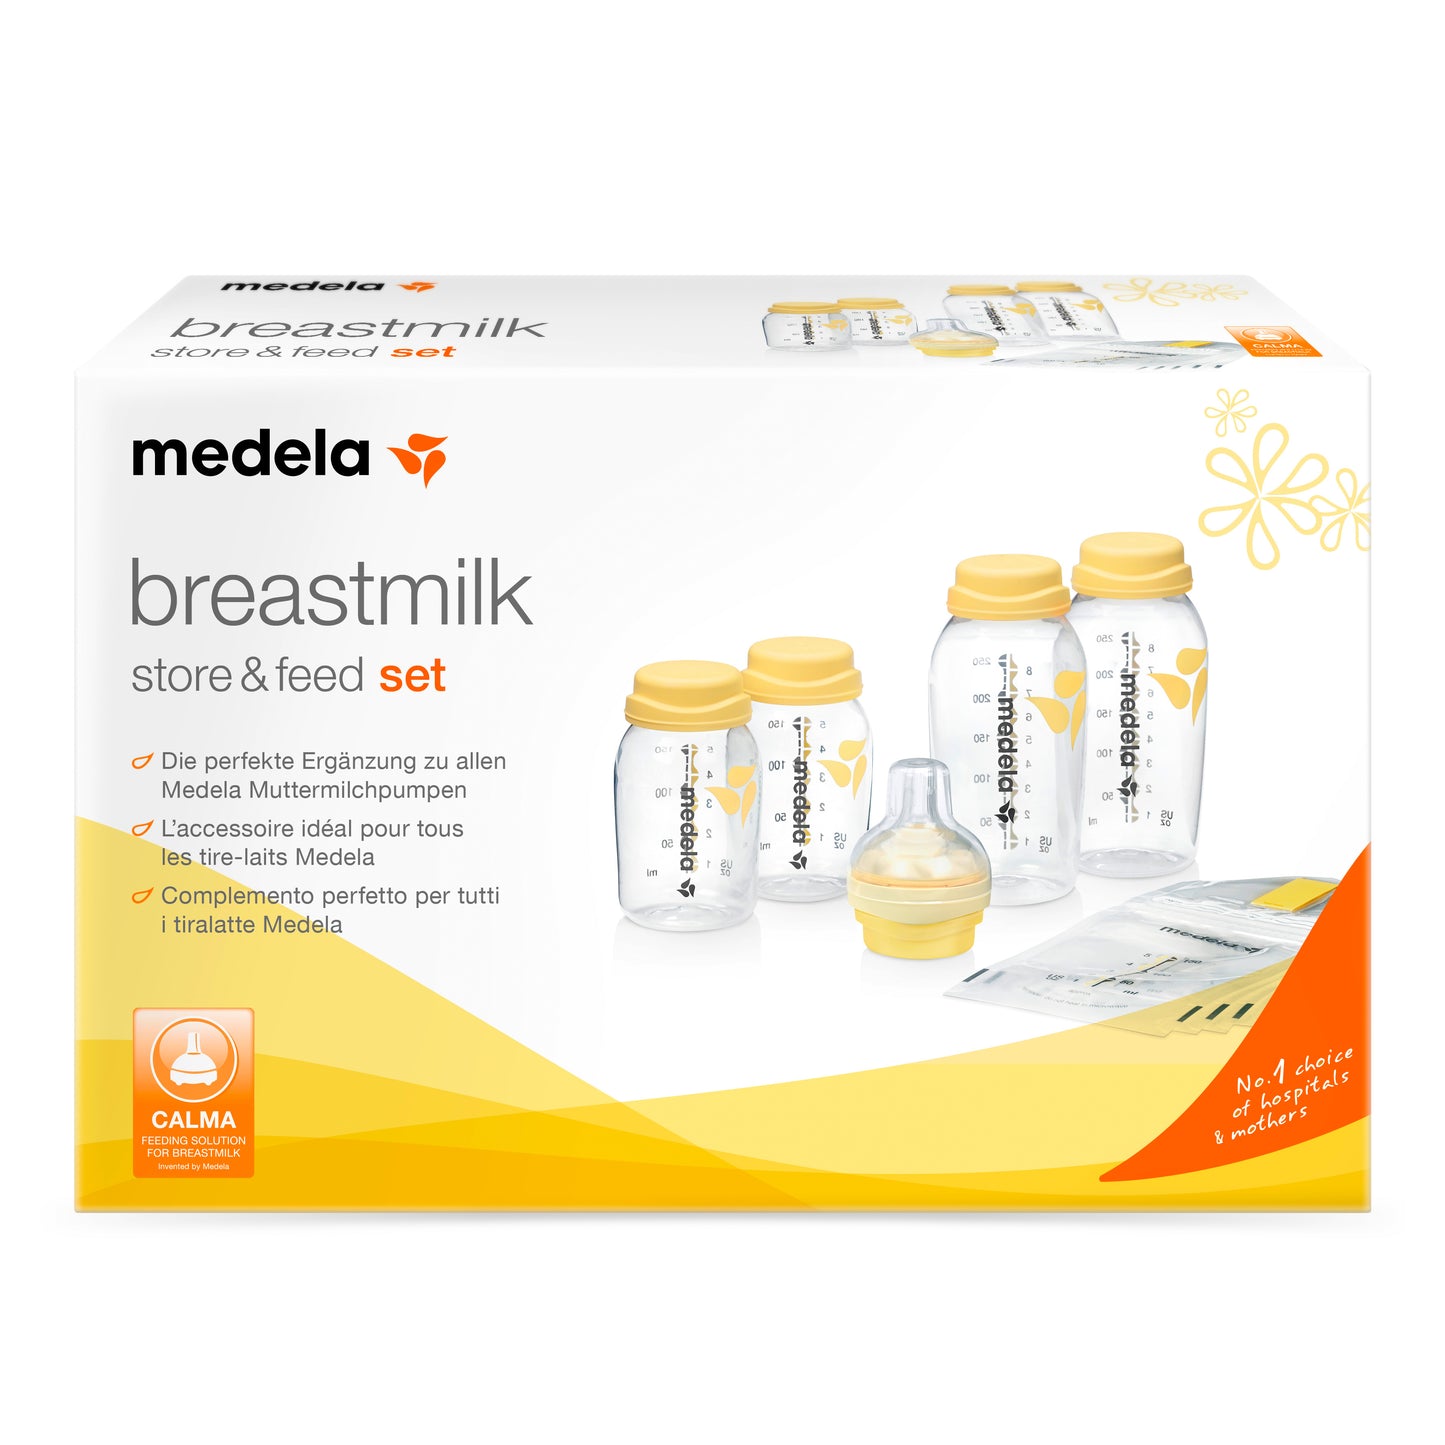 Medela Breastfeeding Store and Feed